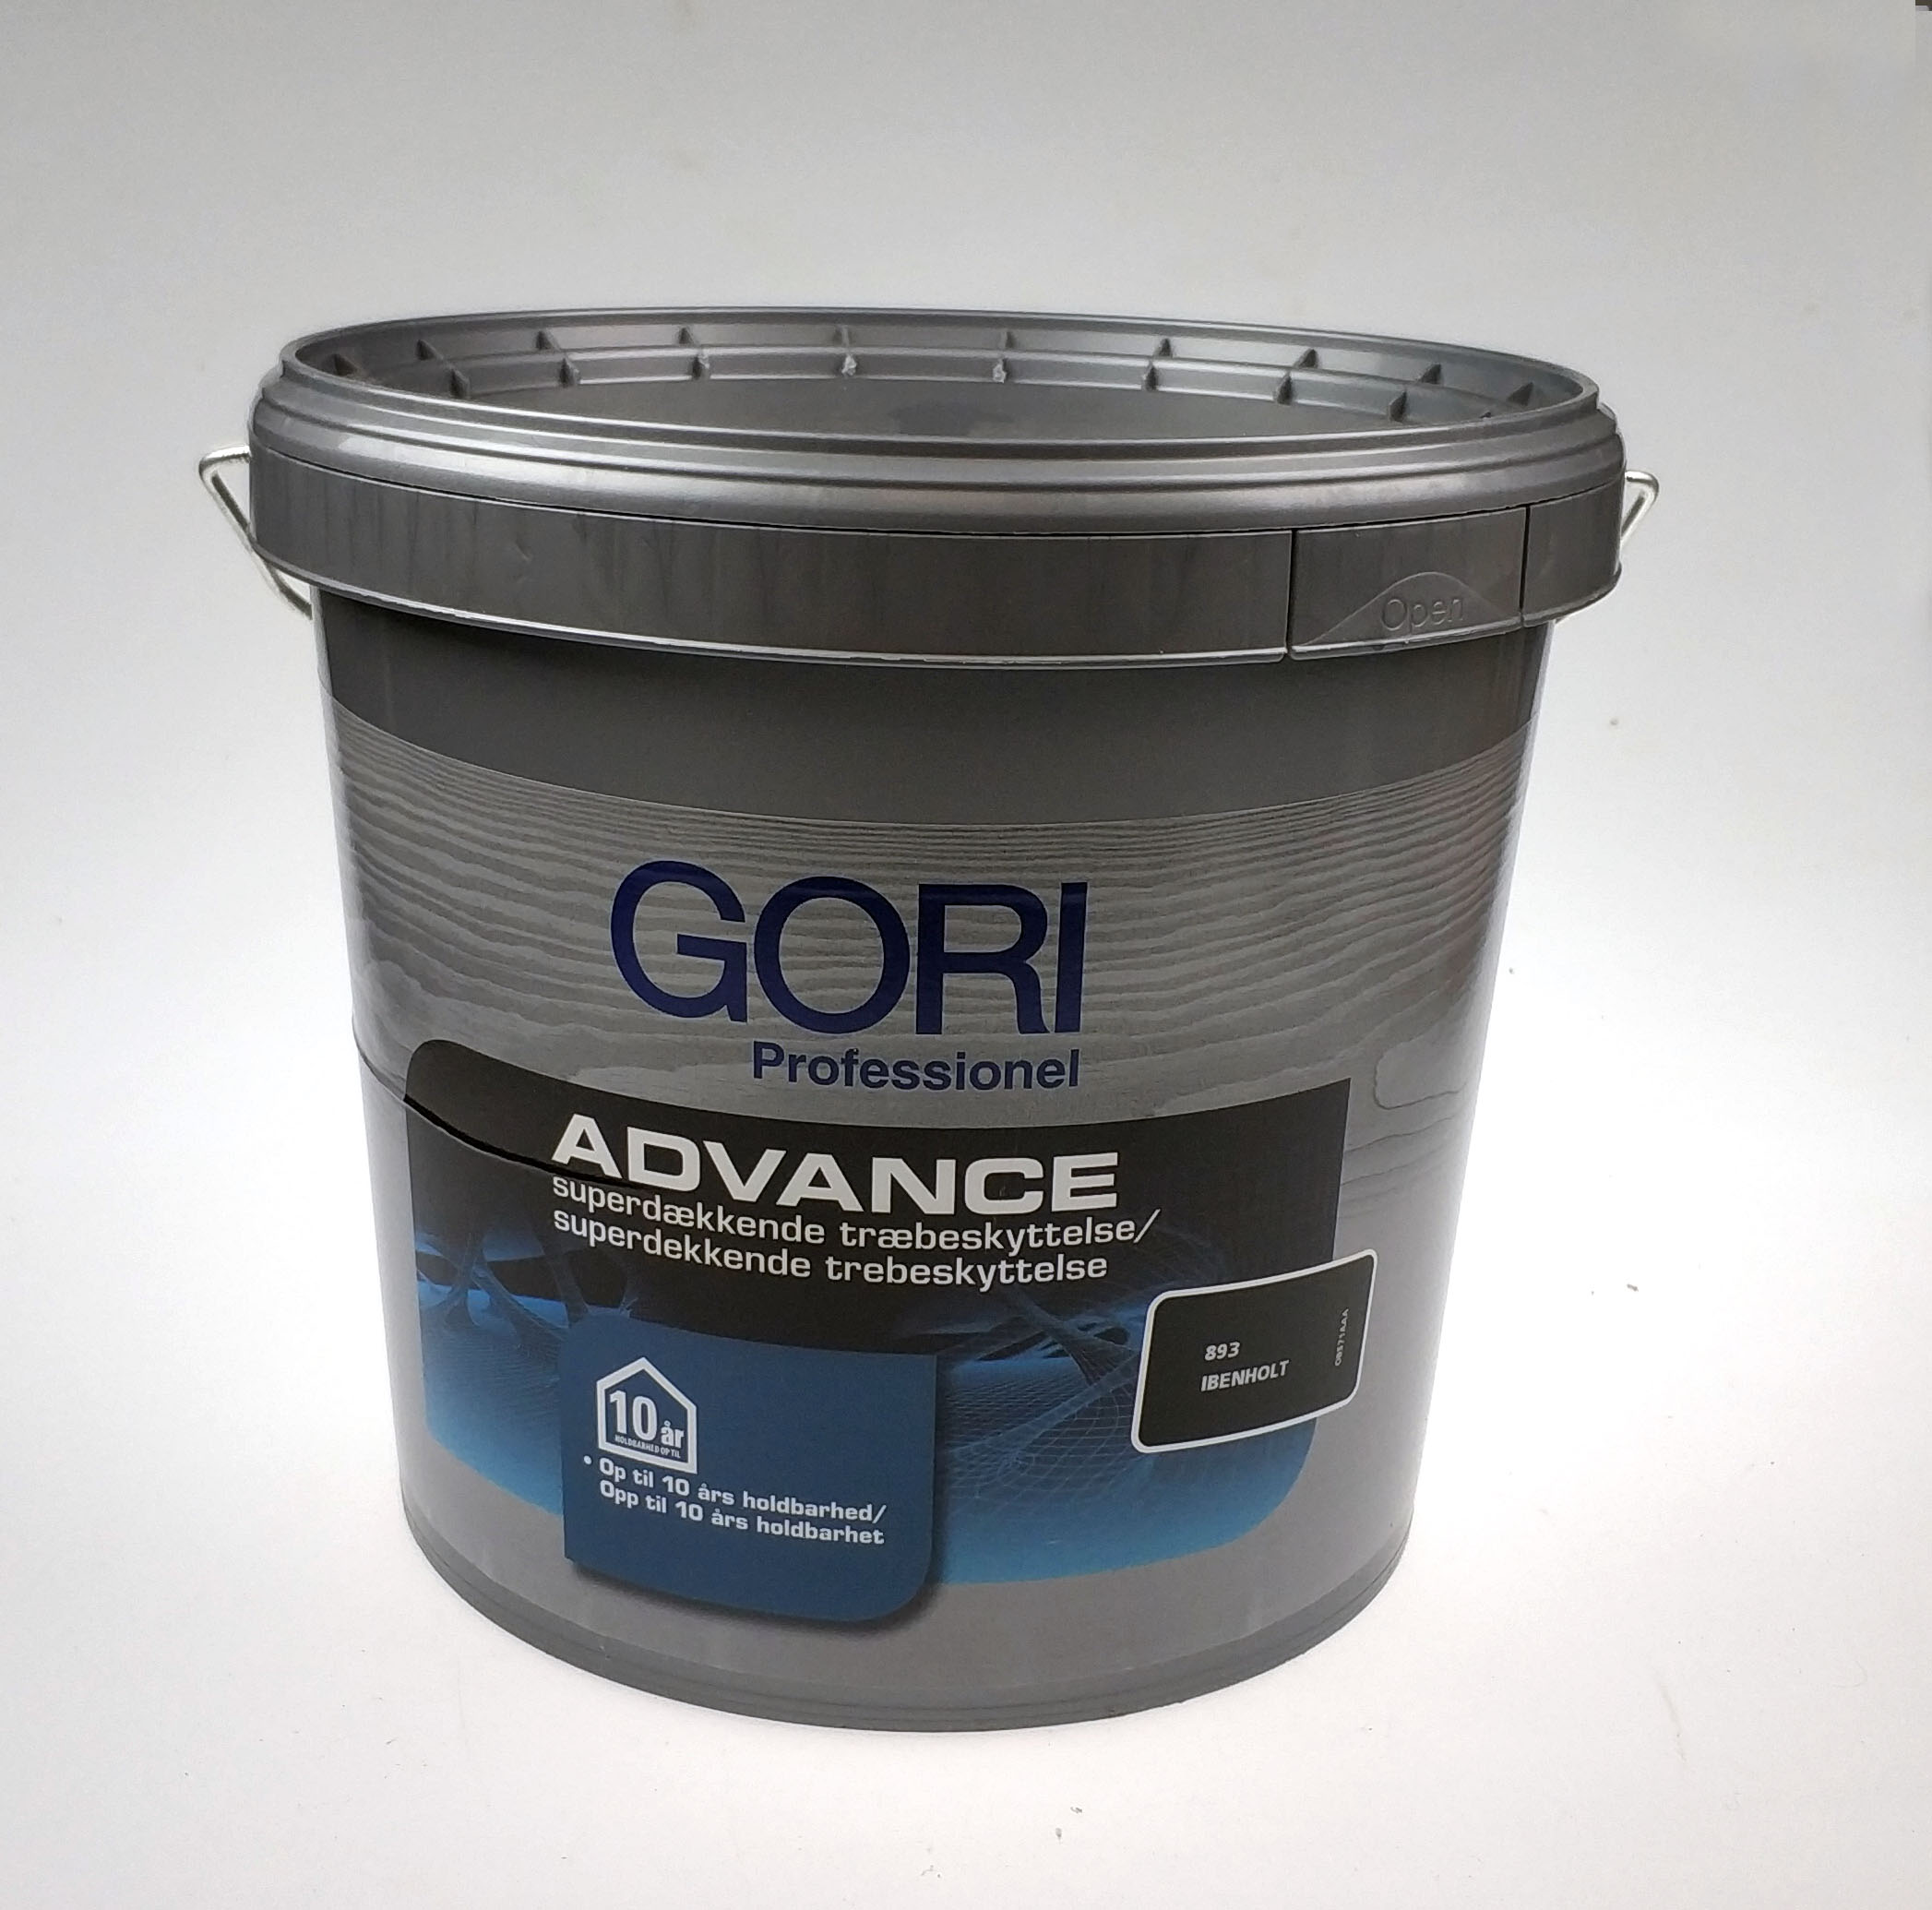 Gori 606 Gori Professional Advance Superdaekkende 5l 539 Inkl Fragt